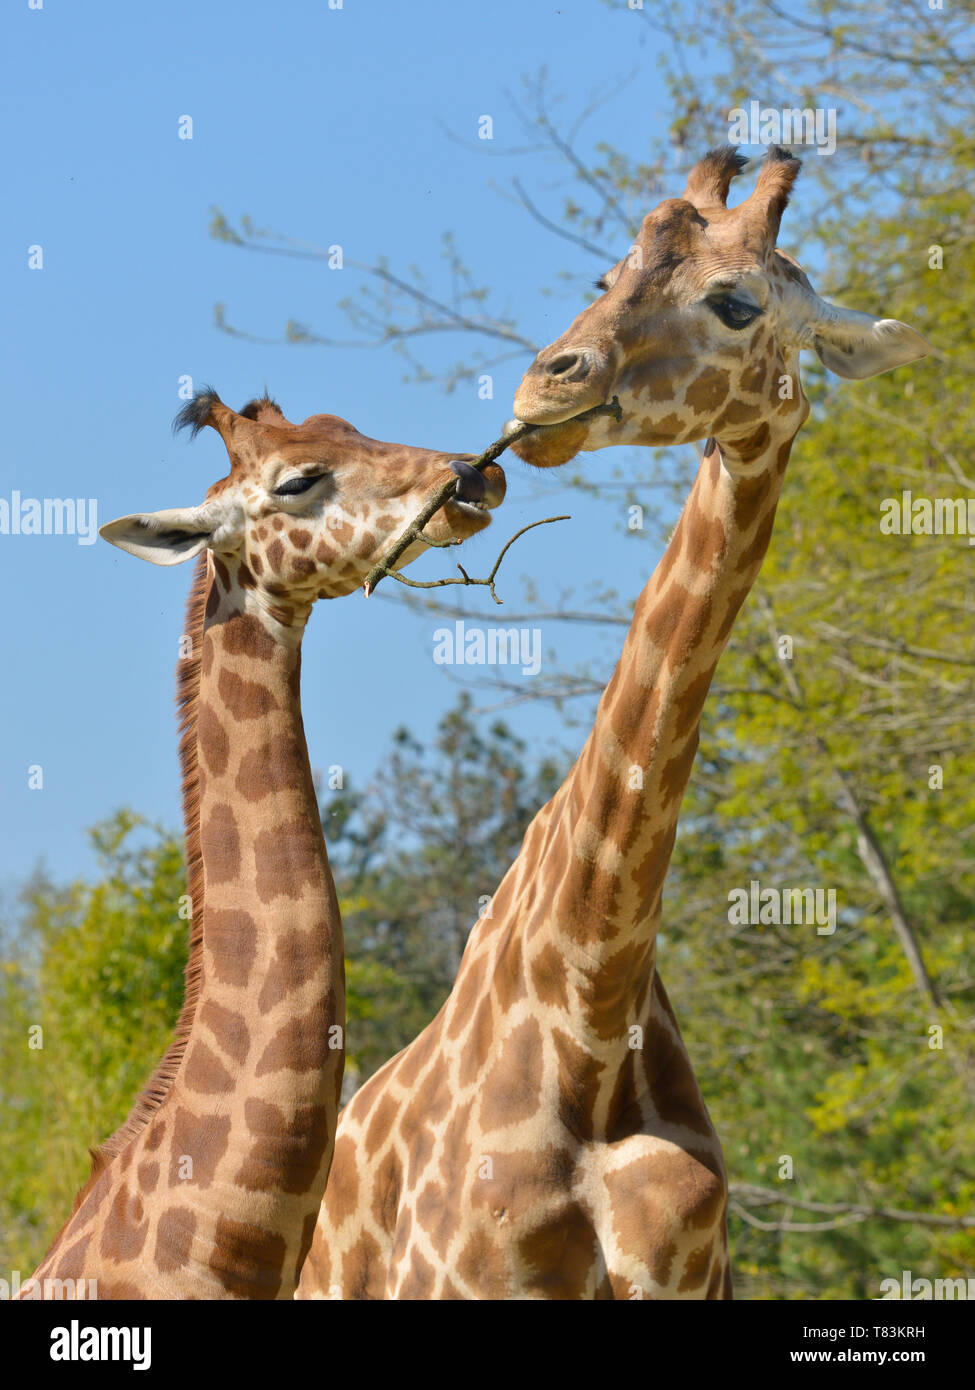 Closeup of two giraffes (Giraffa camelopardalis) with a twig Stock Photo